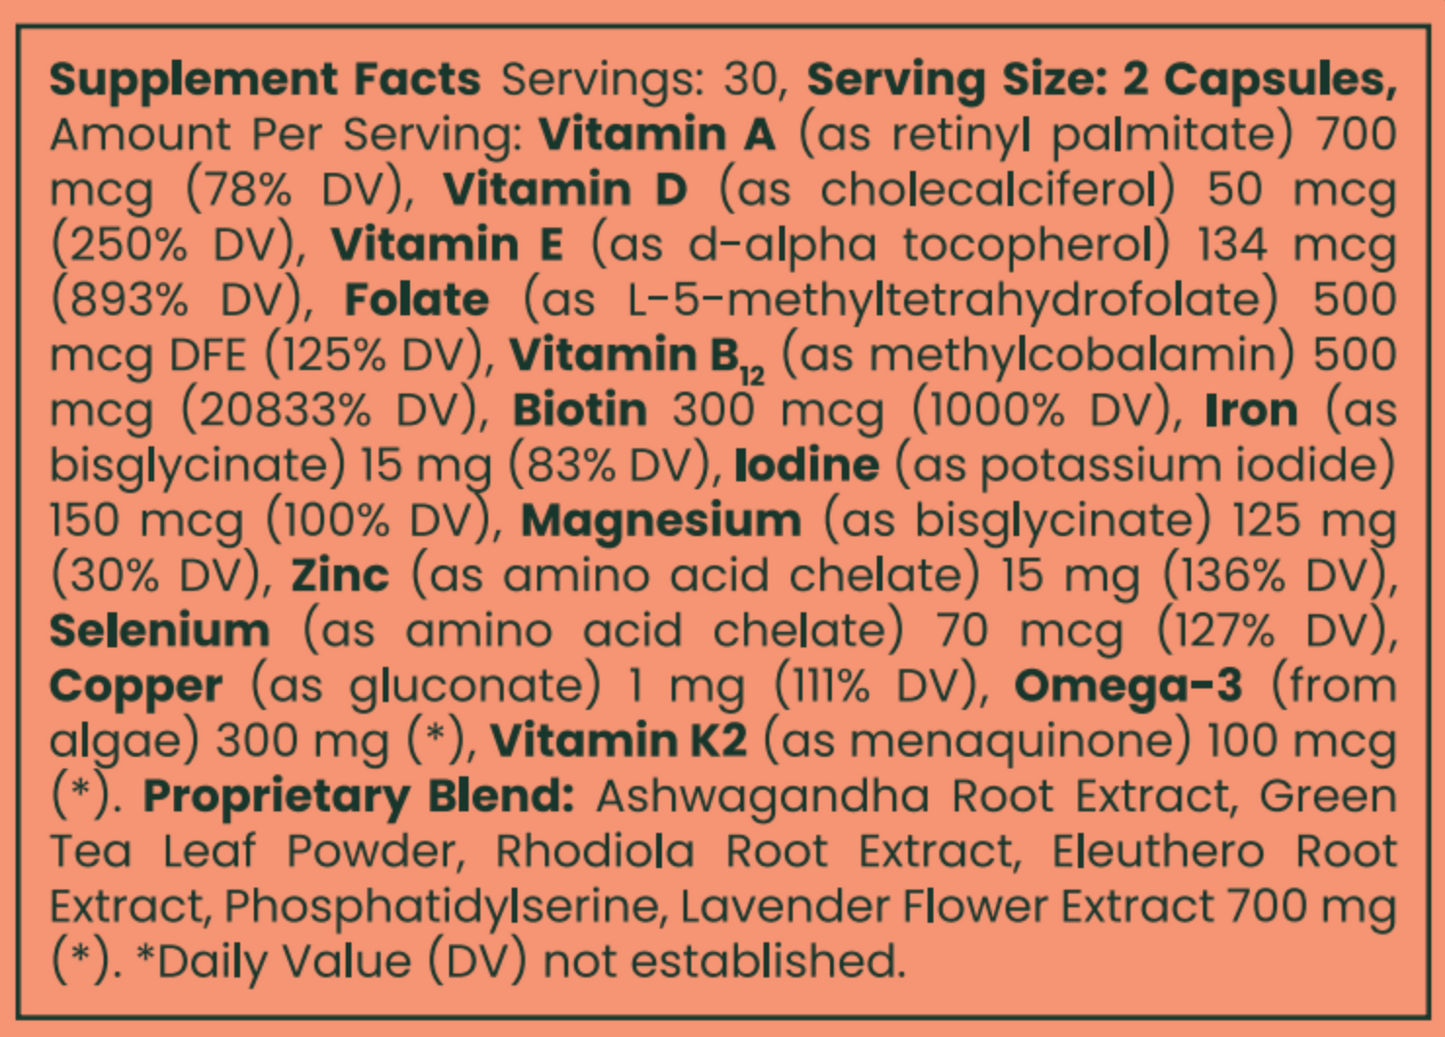 Serving Size: 2 Capsules, Ingredients: Vitamin A, Vitamin D, Vitamin E, Folate, Vitamin B12, Biotin, Iodine, Magnesium, Zinc, Selenium, Copper, Omega-3 , Vitamin K2